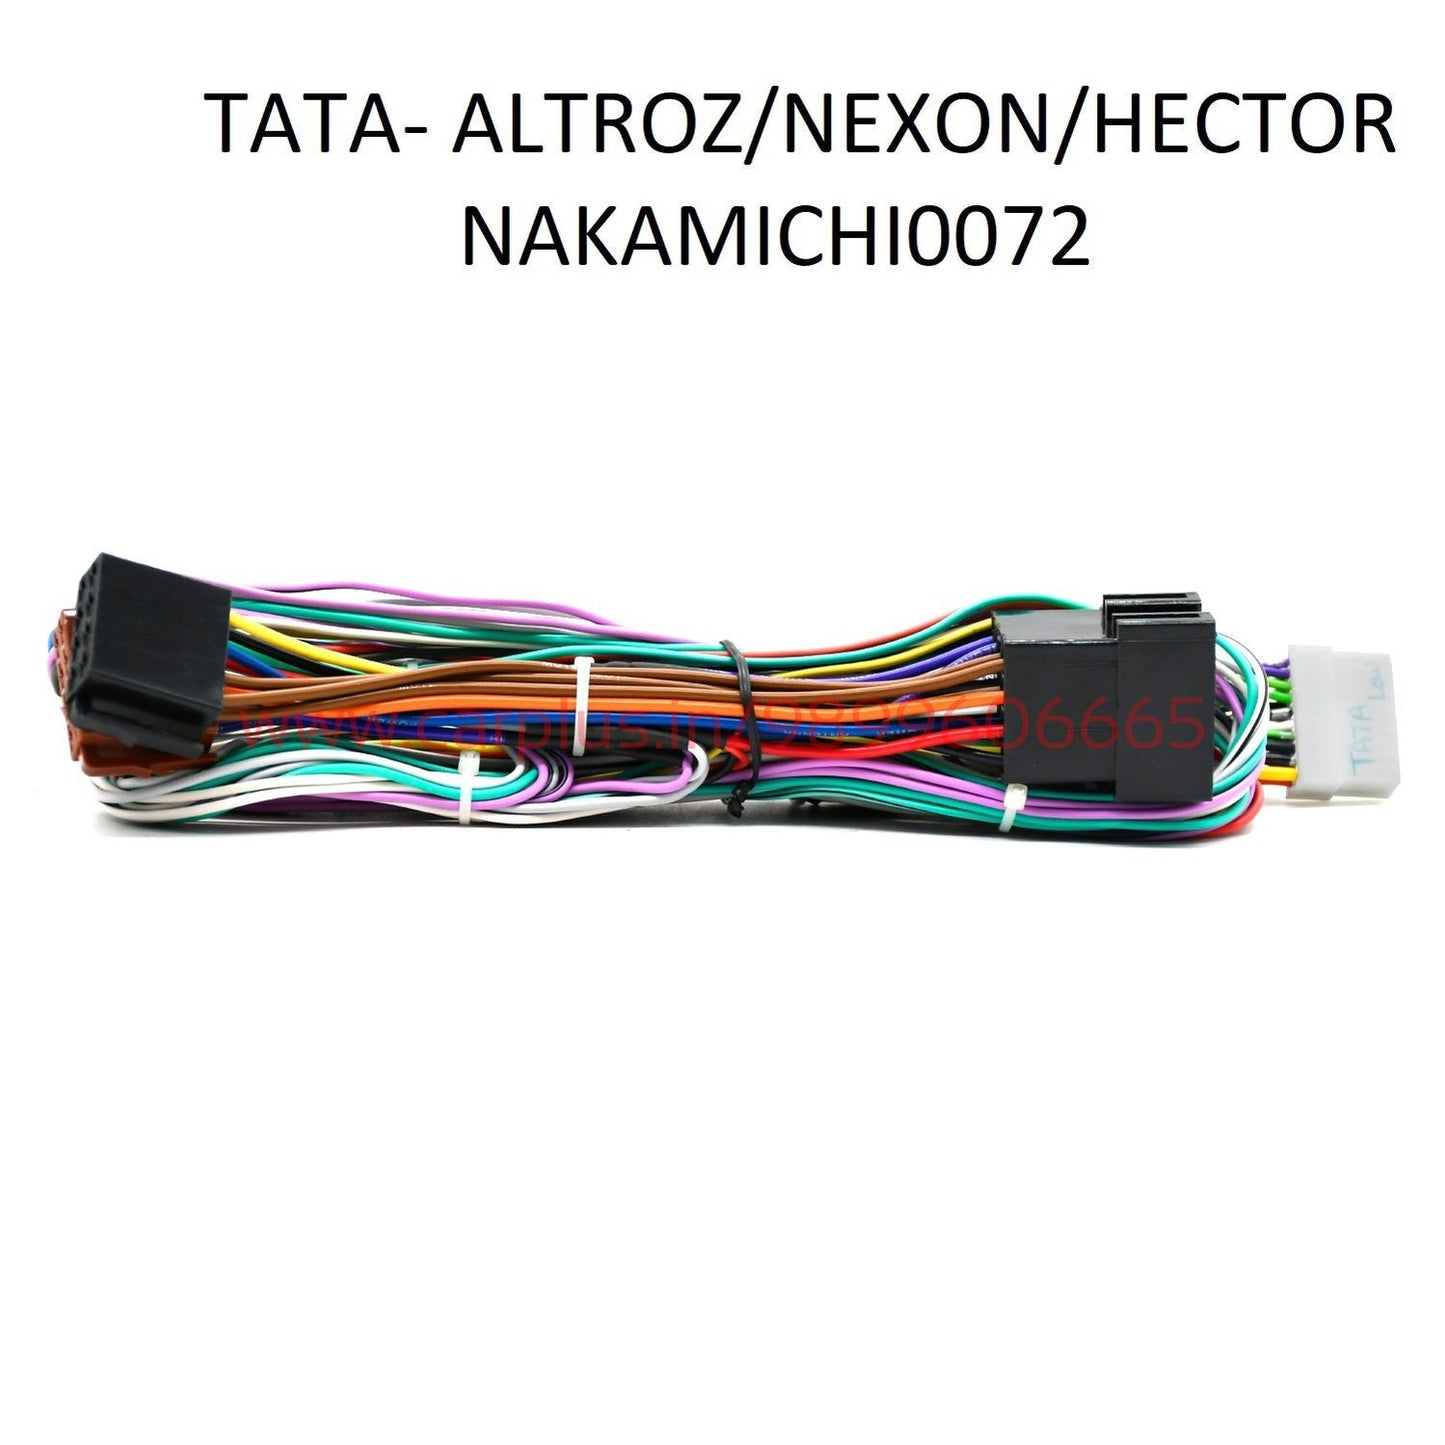 
                  
                    NAKAMICHI Connector For DSP-DSP CONNECTOR-NAKAMICHI-TATA- ALTROZ/NEXON/MG HECTOR-CARPLUS
                  
                